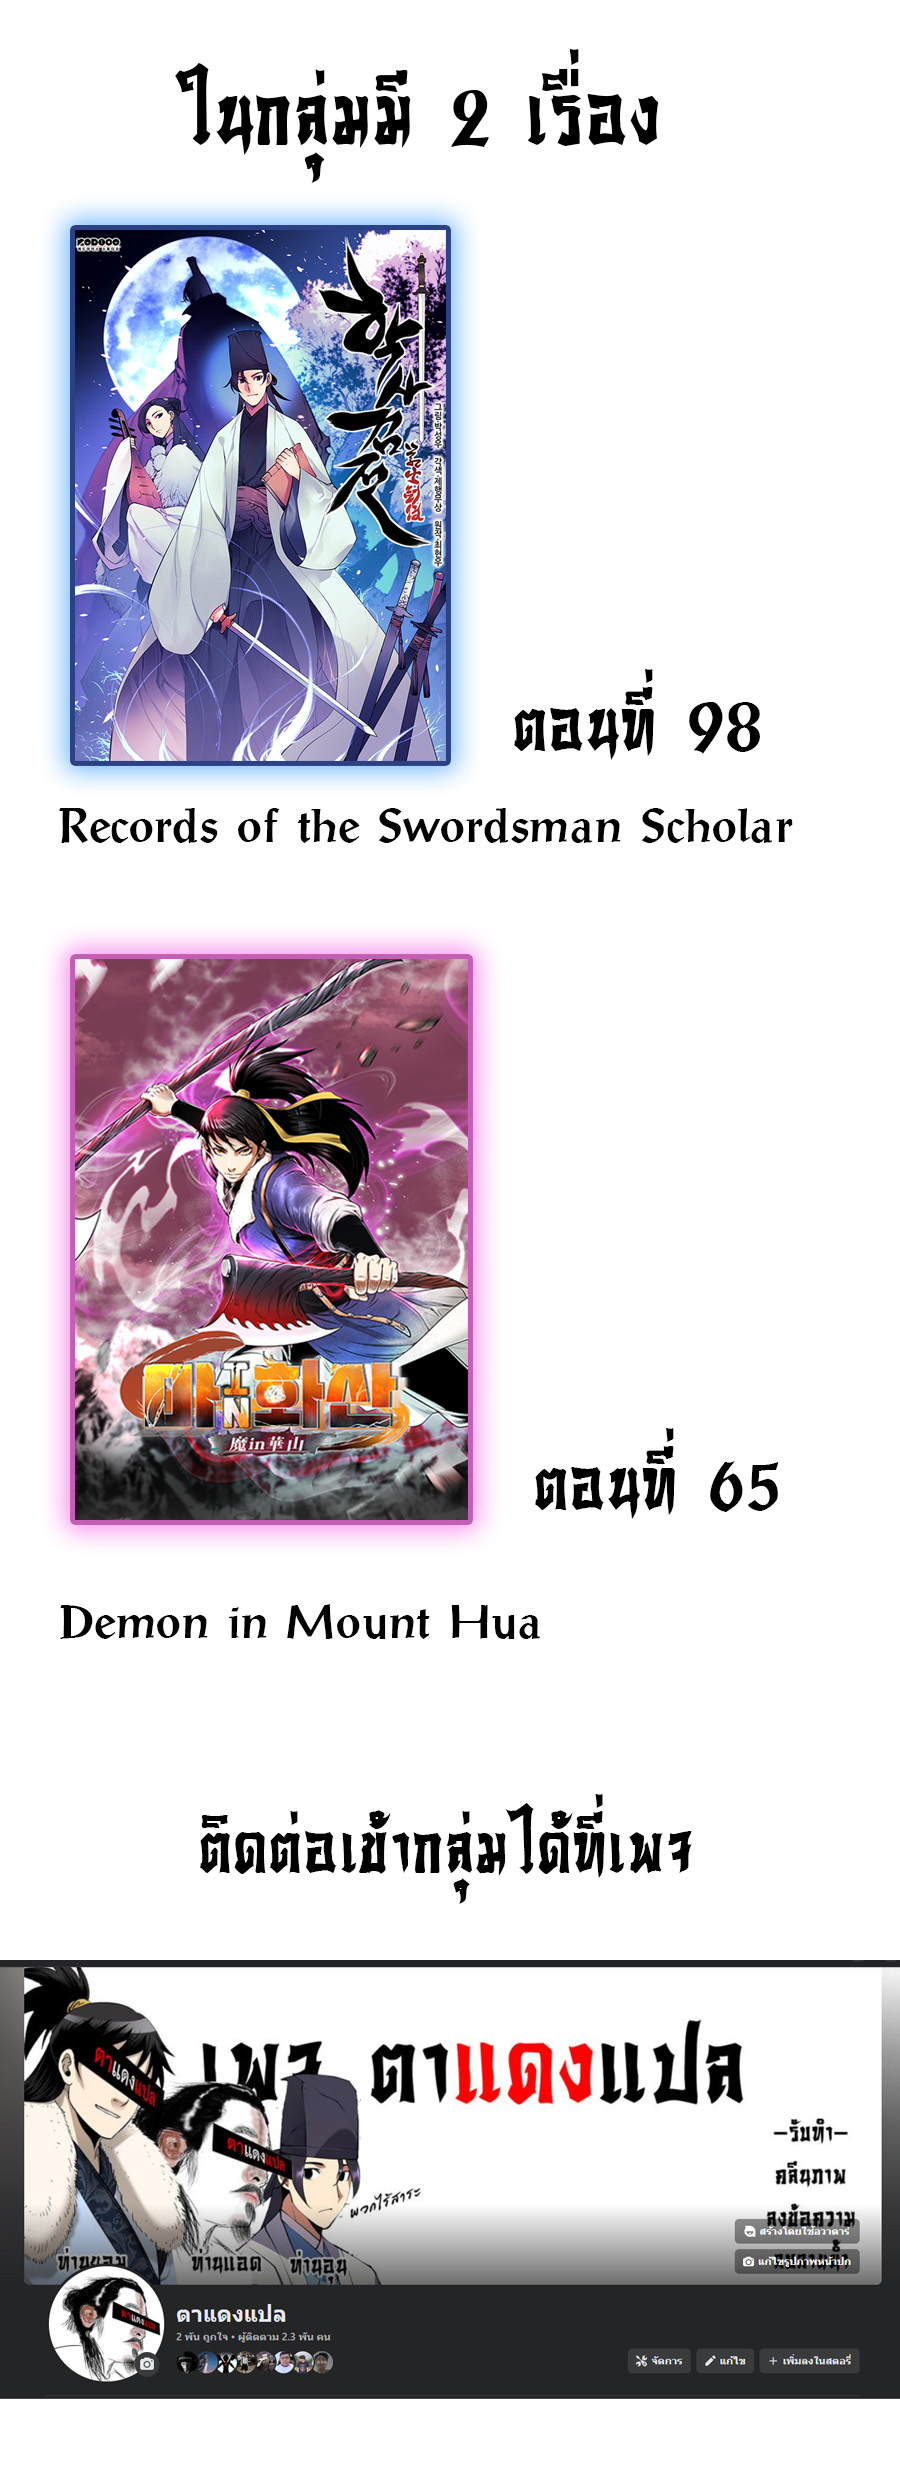 Records of the Swordsman Scholar 78 (16)